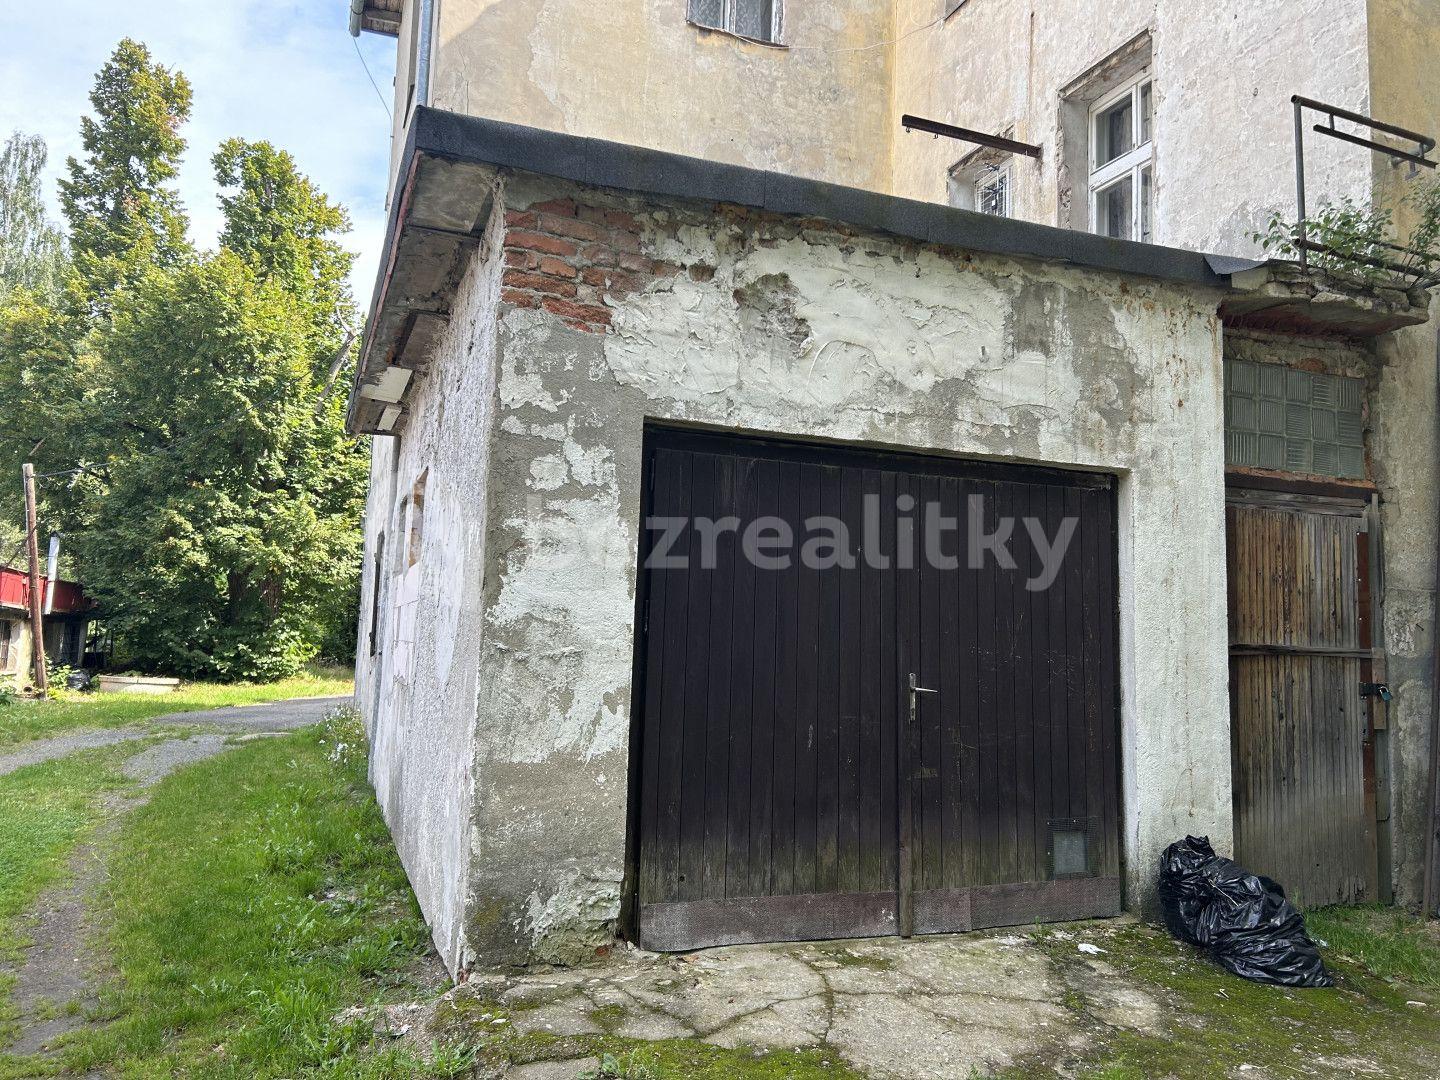 Prodej garáže 18 m², Tř. T. G. Masaryka, Nový Bor, Liberecký kraj